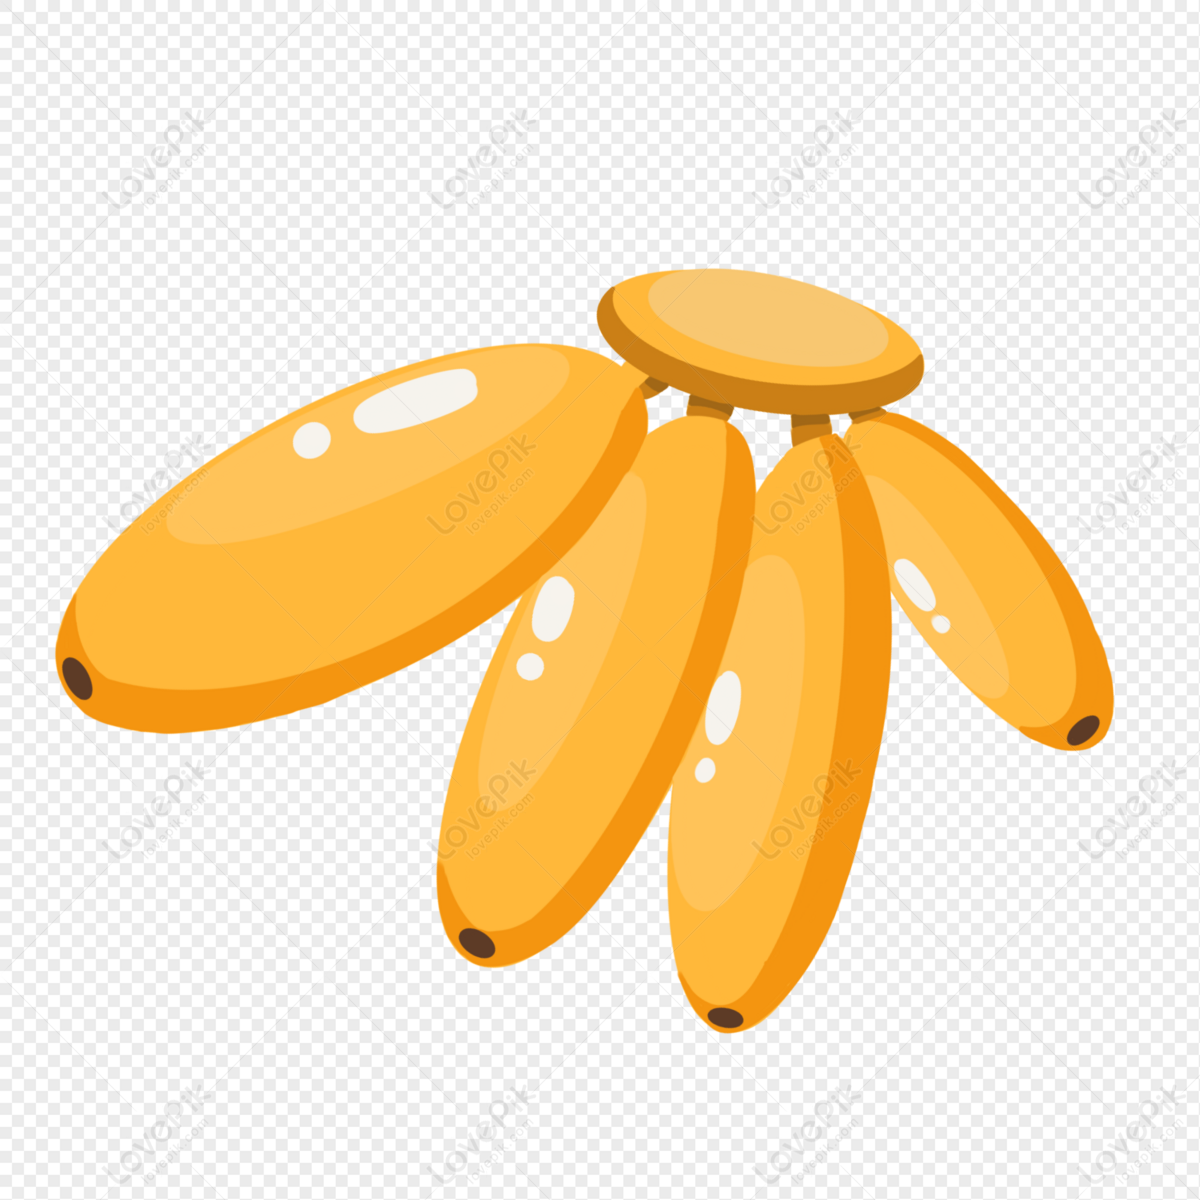 Banana, Download Grátis, Desenho, Vetor